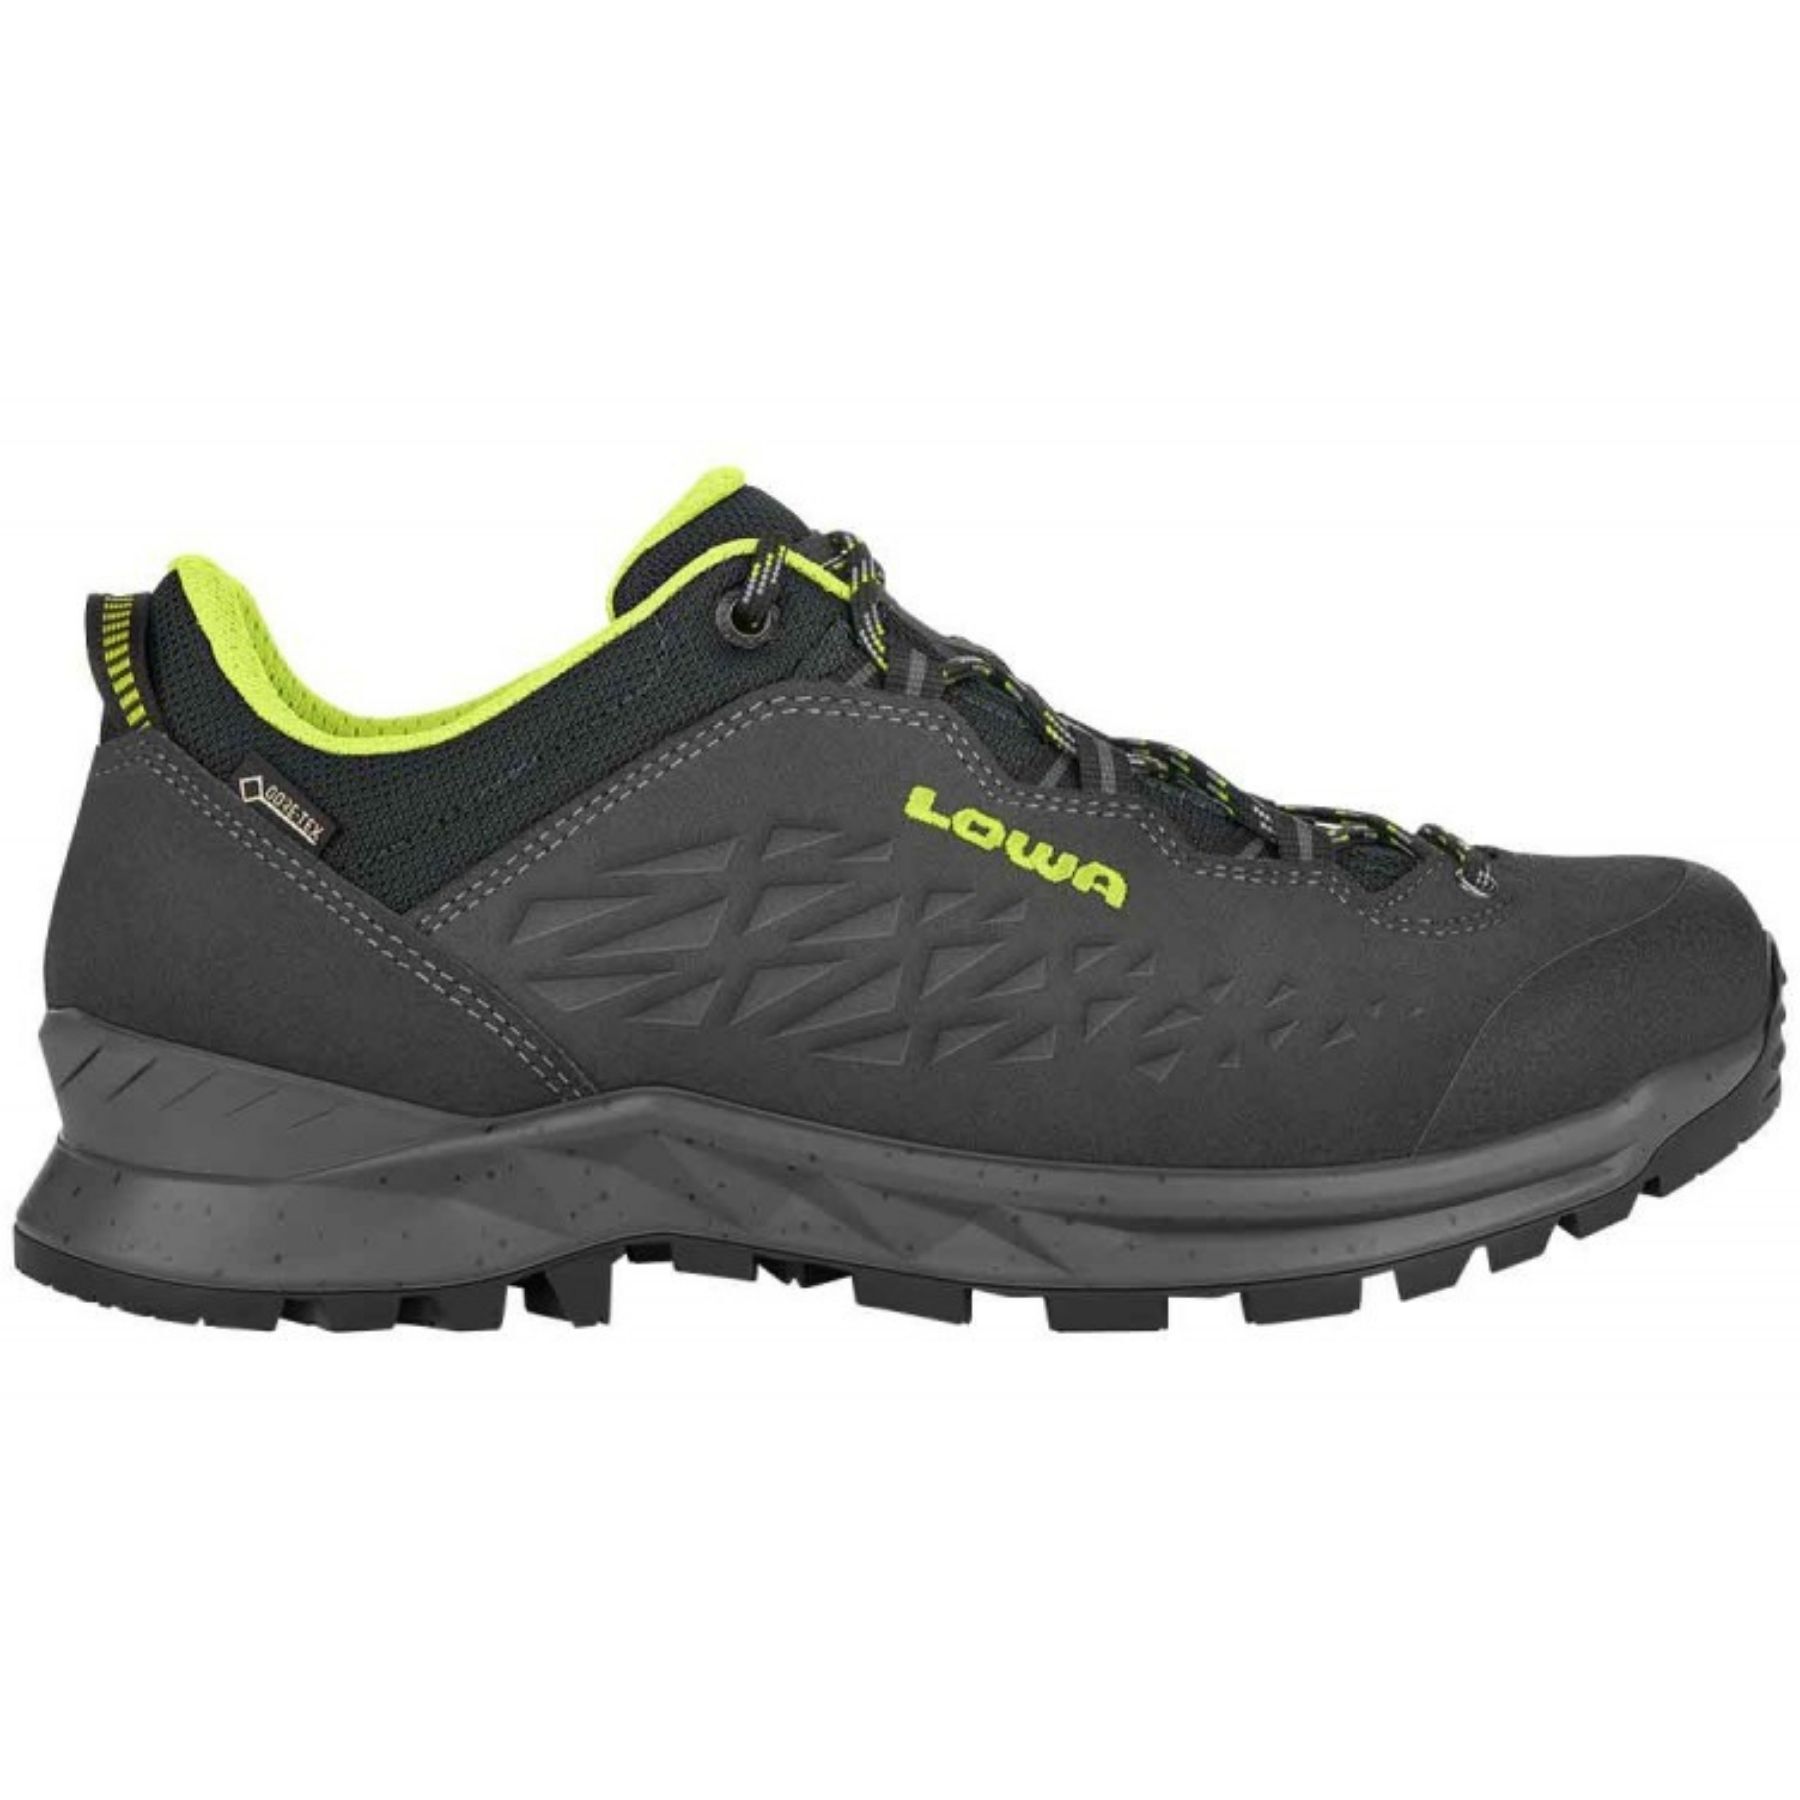 Lowa Explorer GTX Lo - Walking Boots - Men's